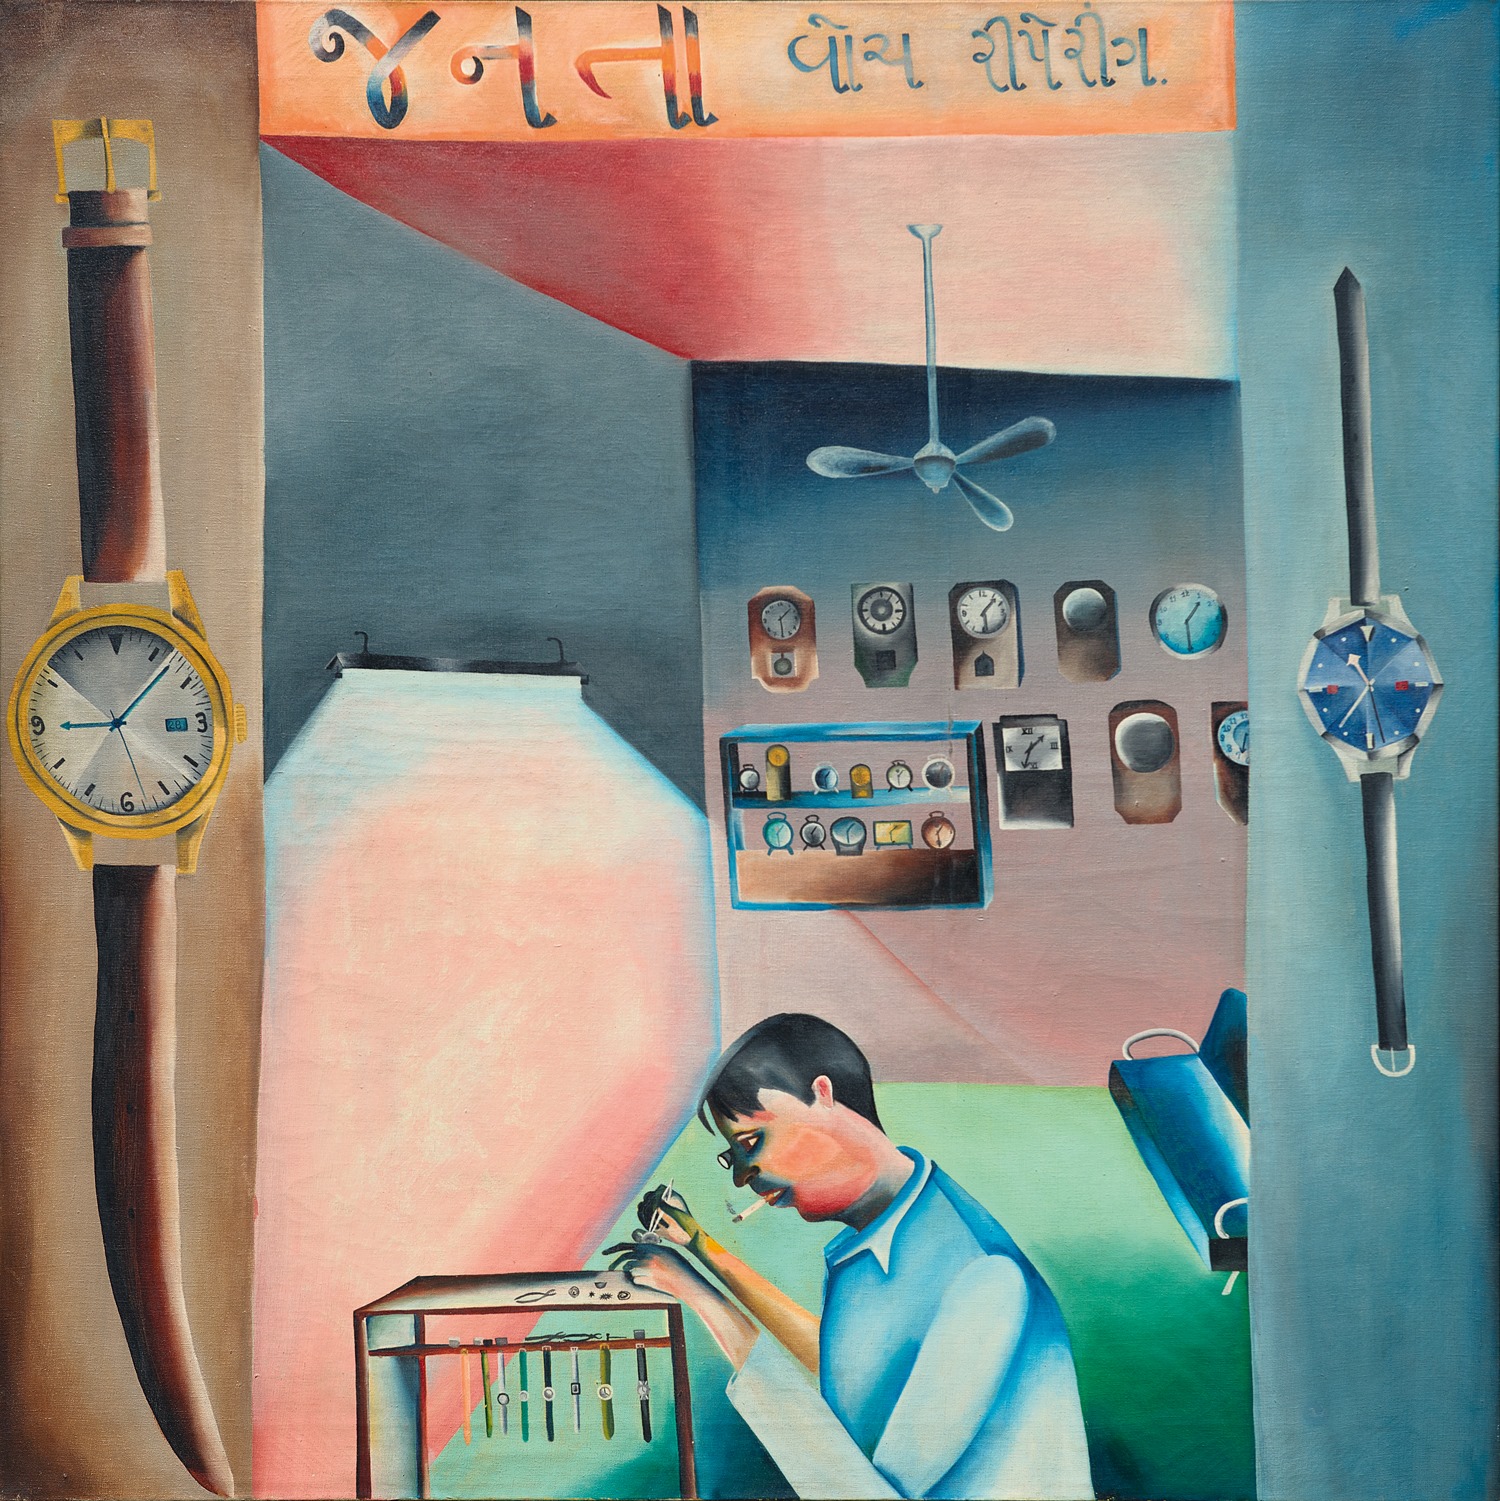 BHUPEN KHAKHAR, Janata Watch Repairing, 1972, oil on canvas